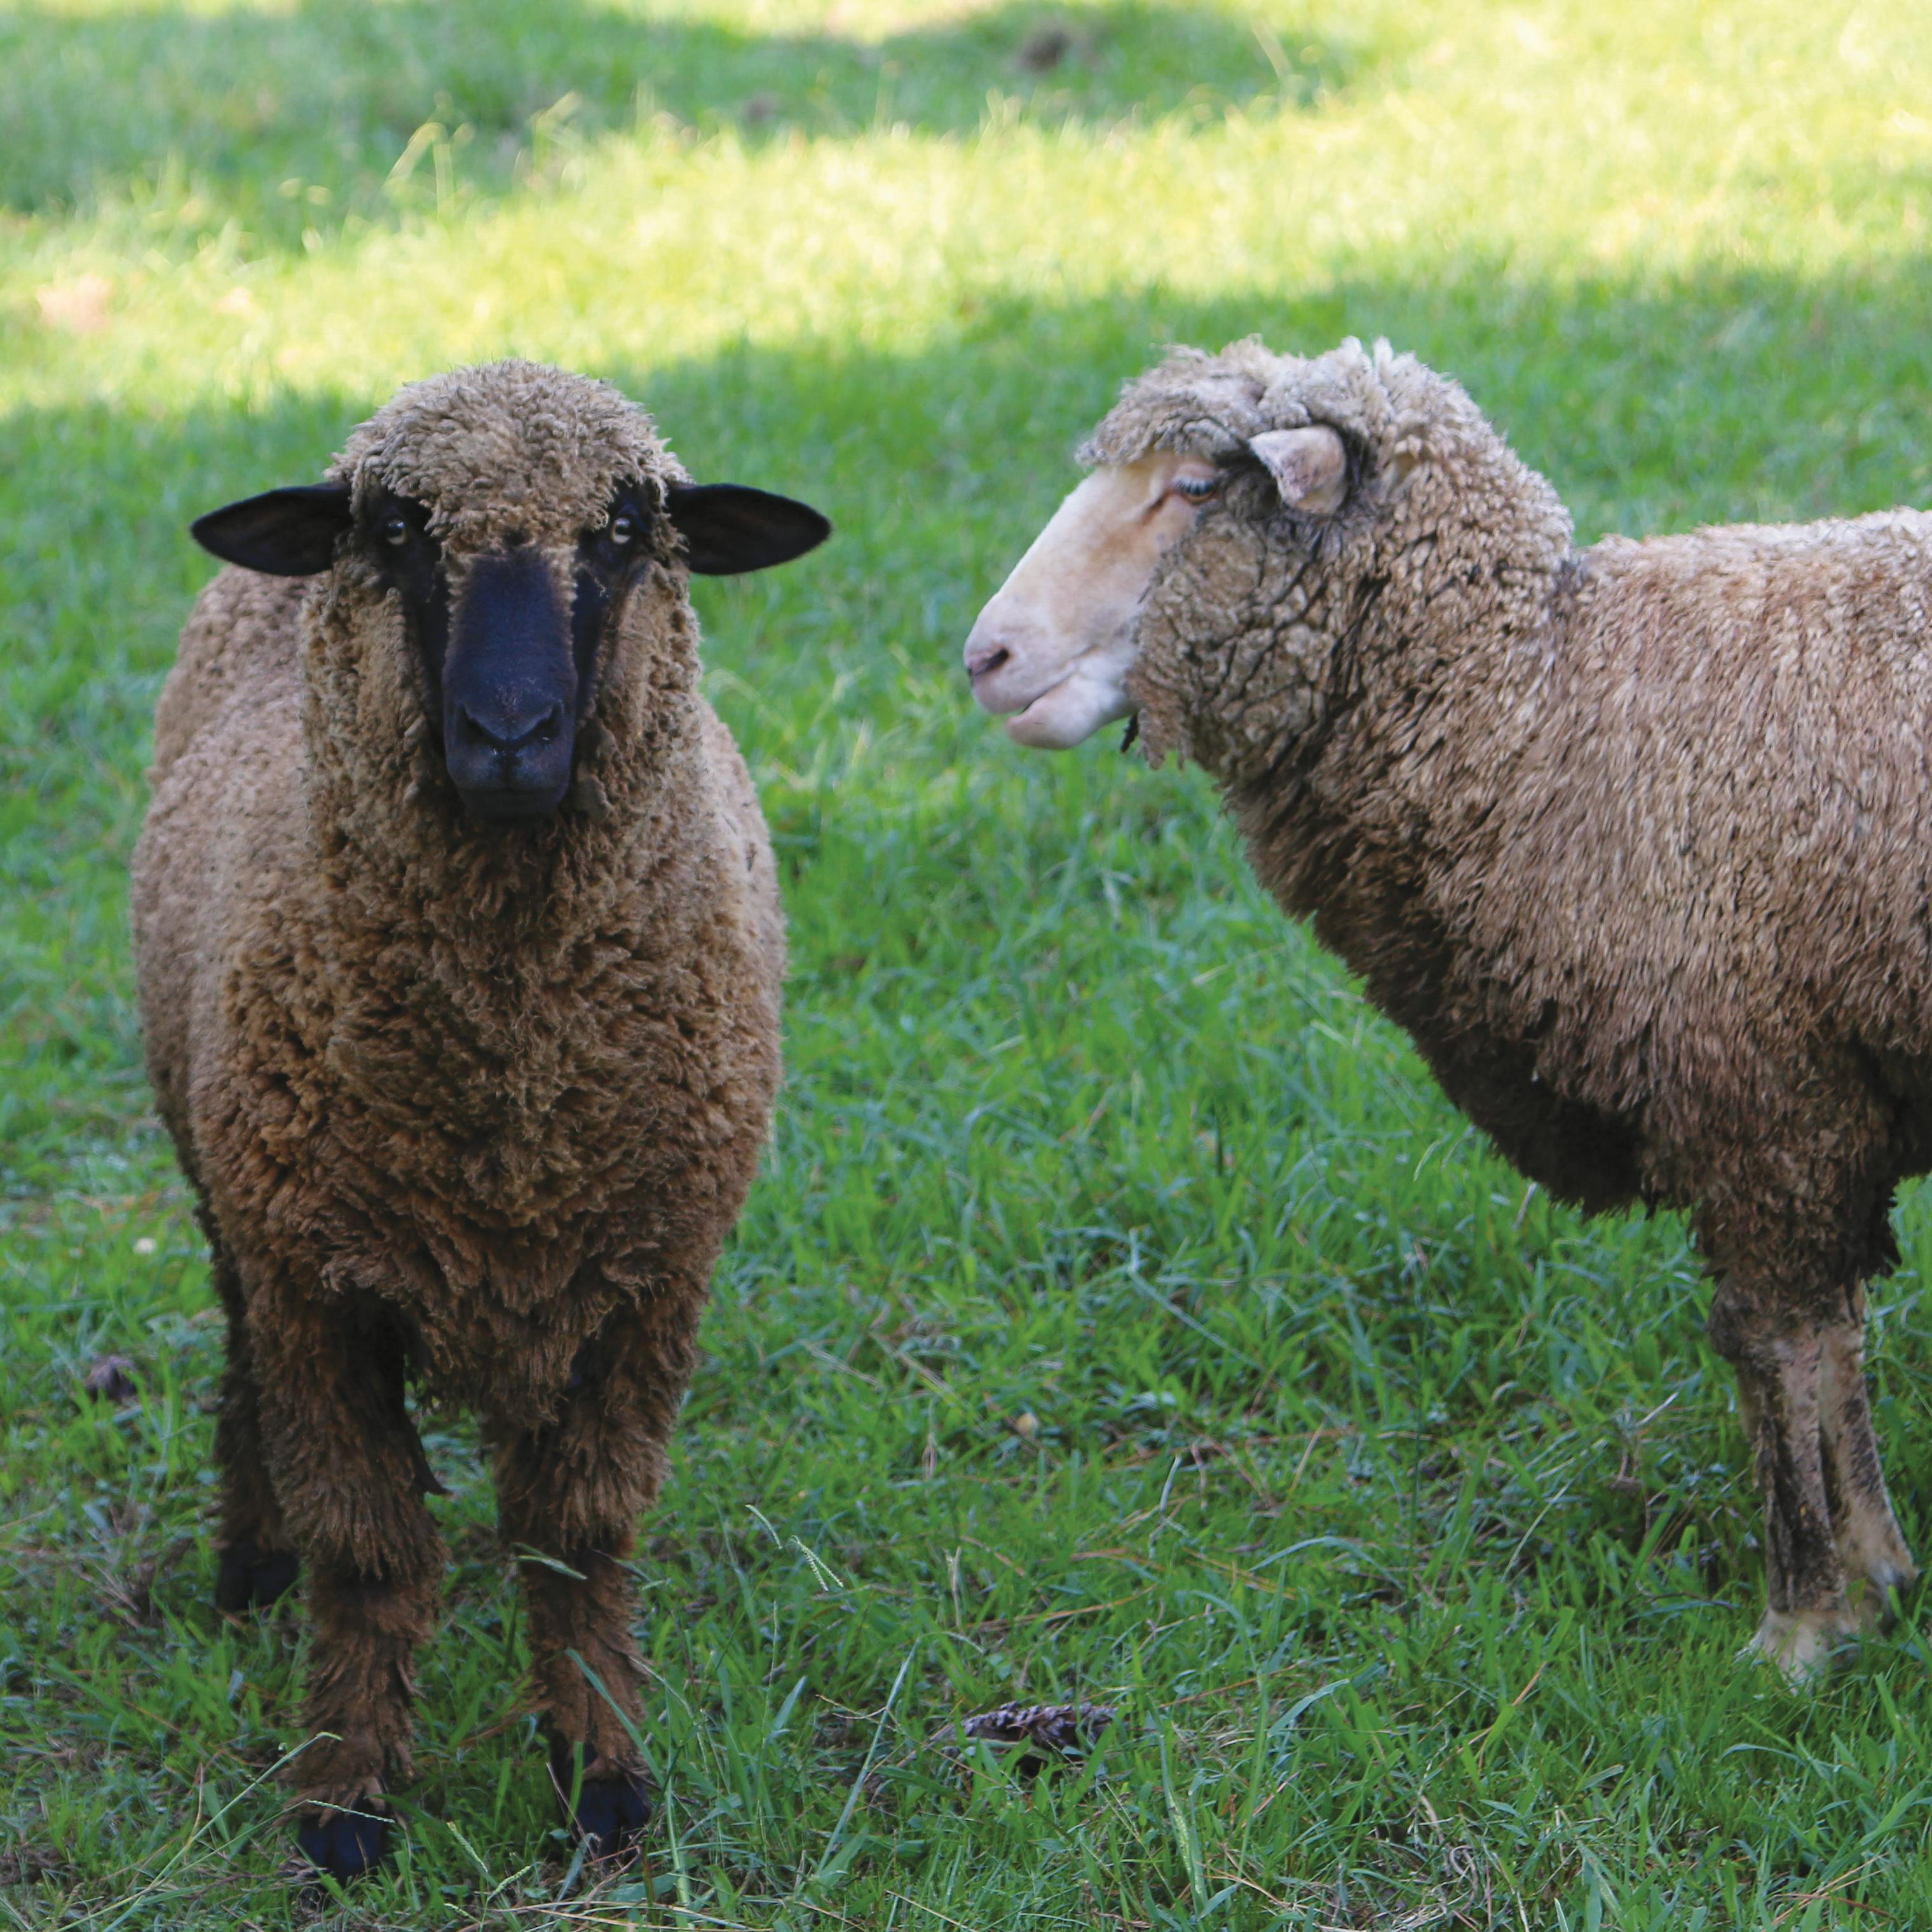 Two brown merino sheep on lawn